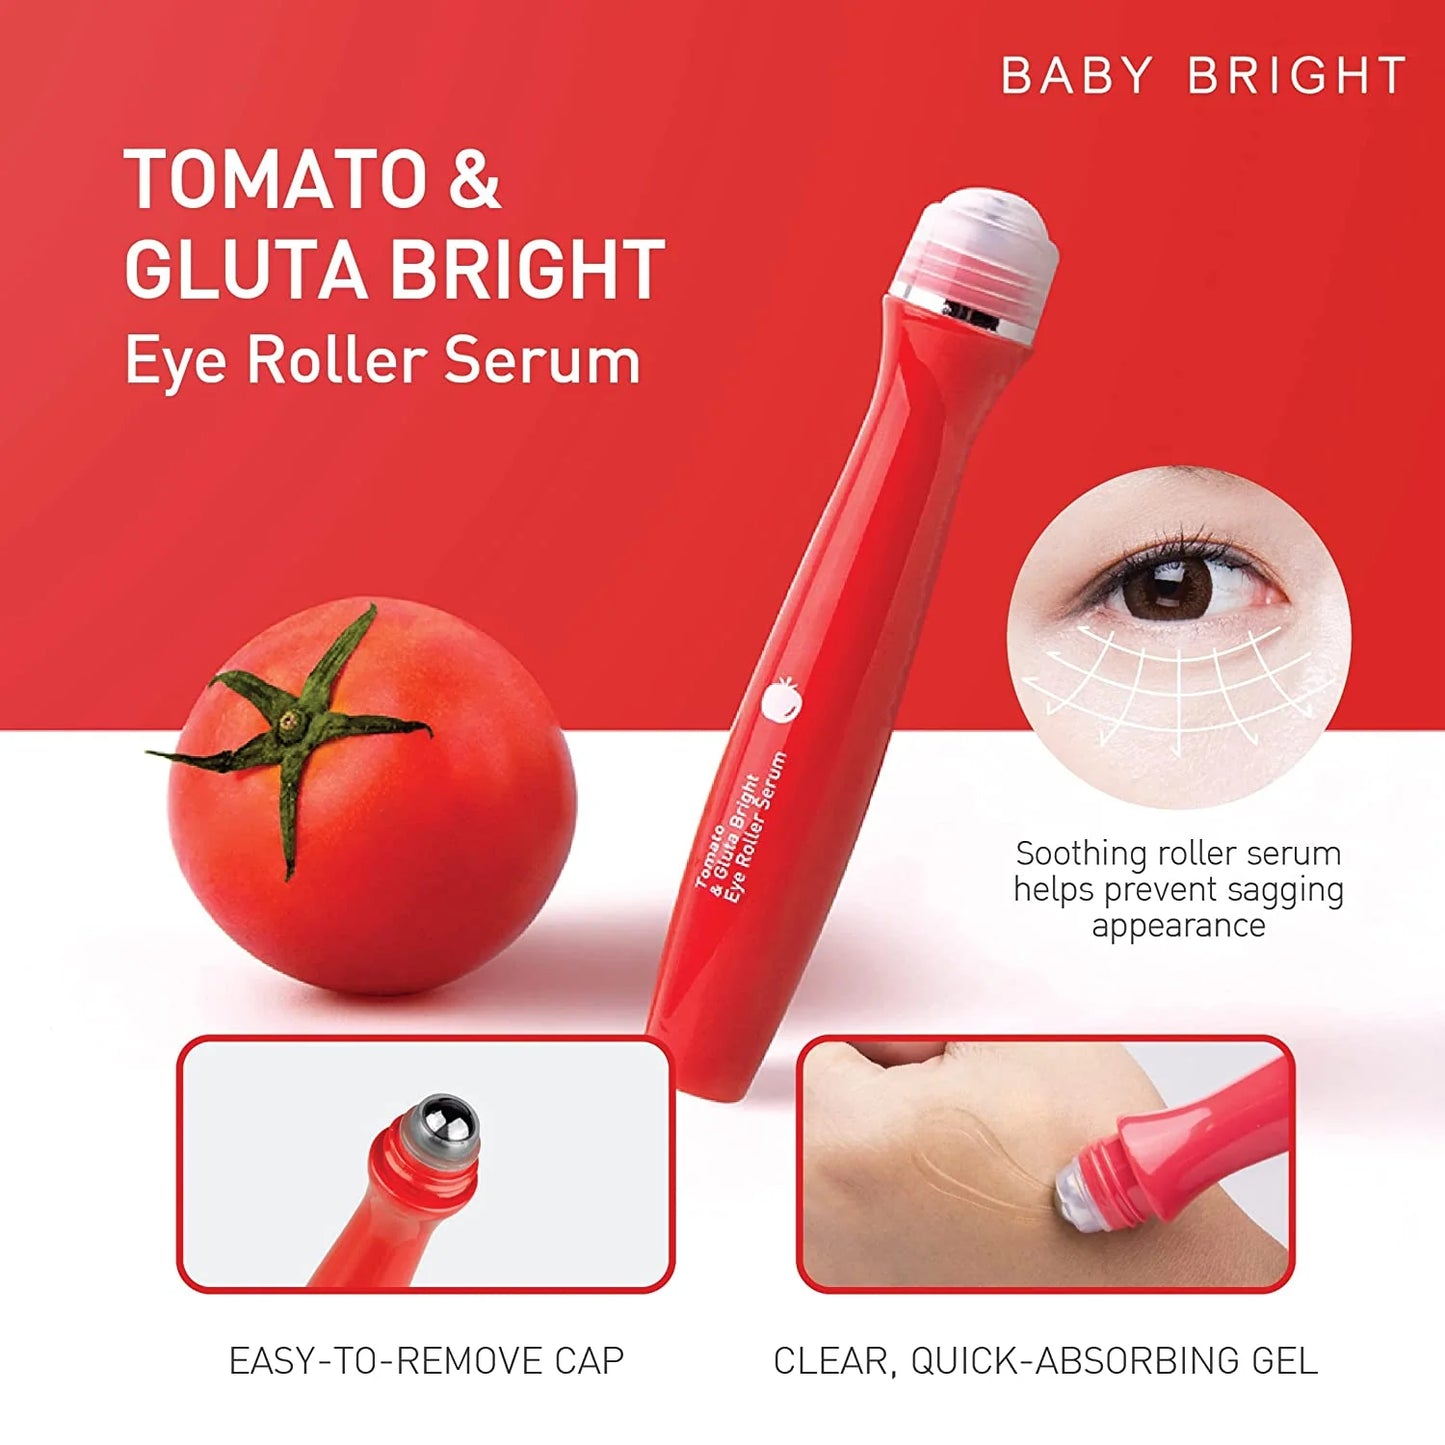 Baby Bright Tomato & Gluta Eye Roller Serum